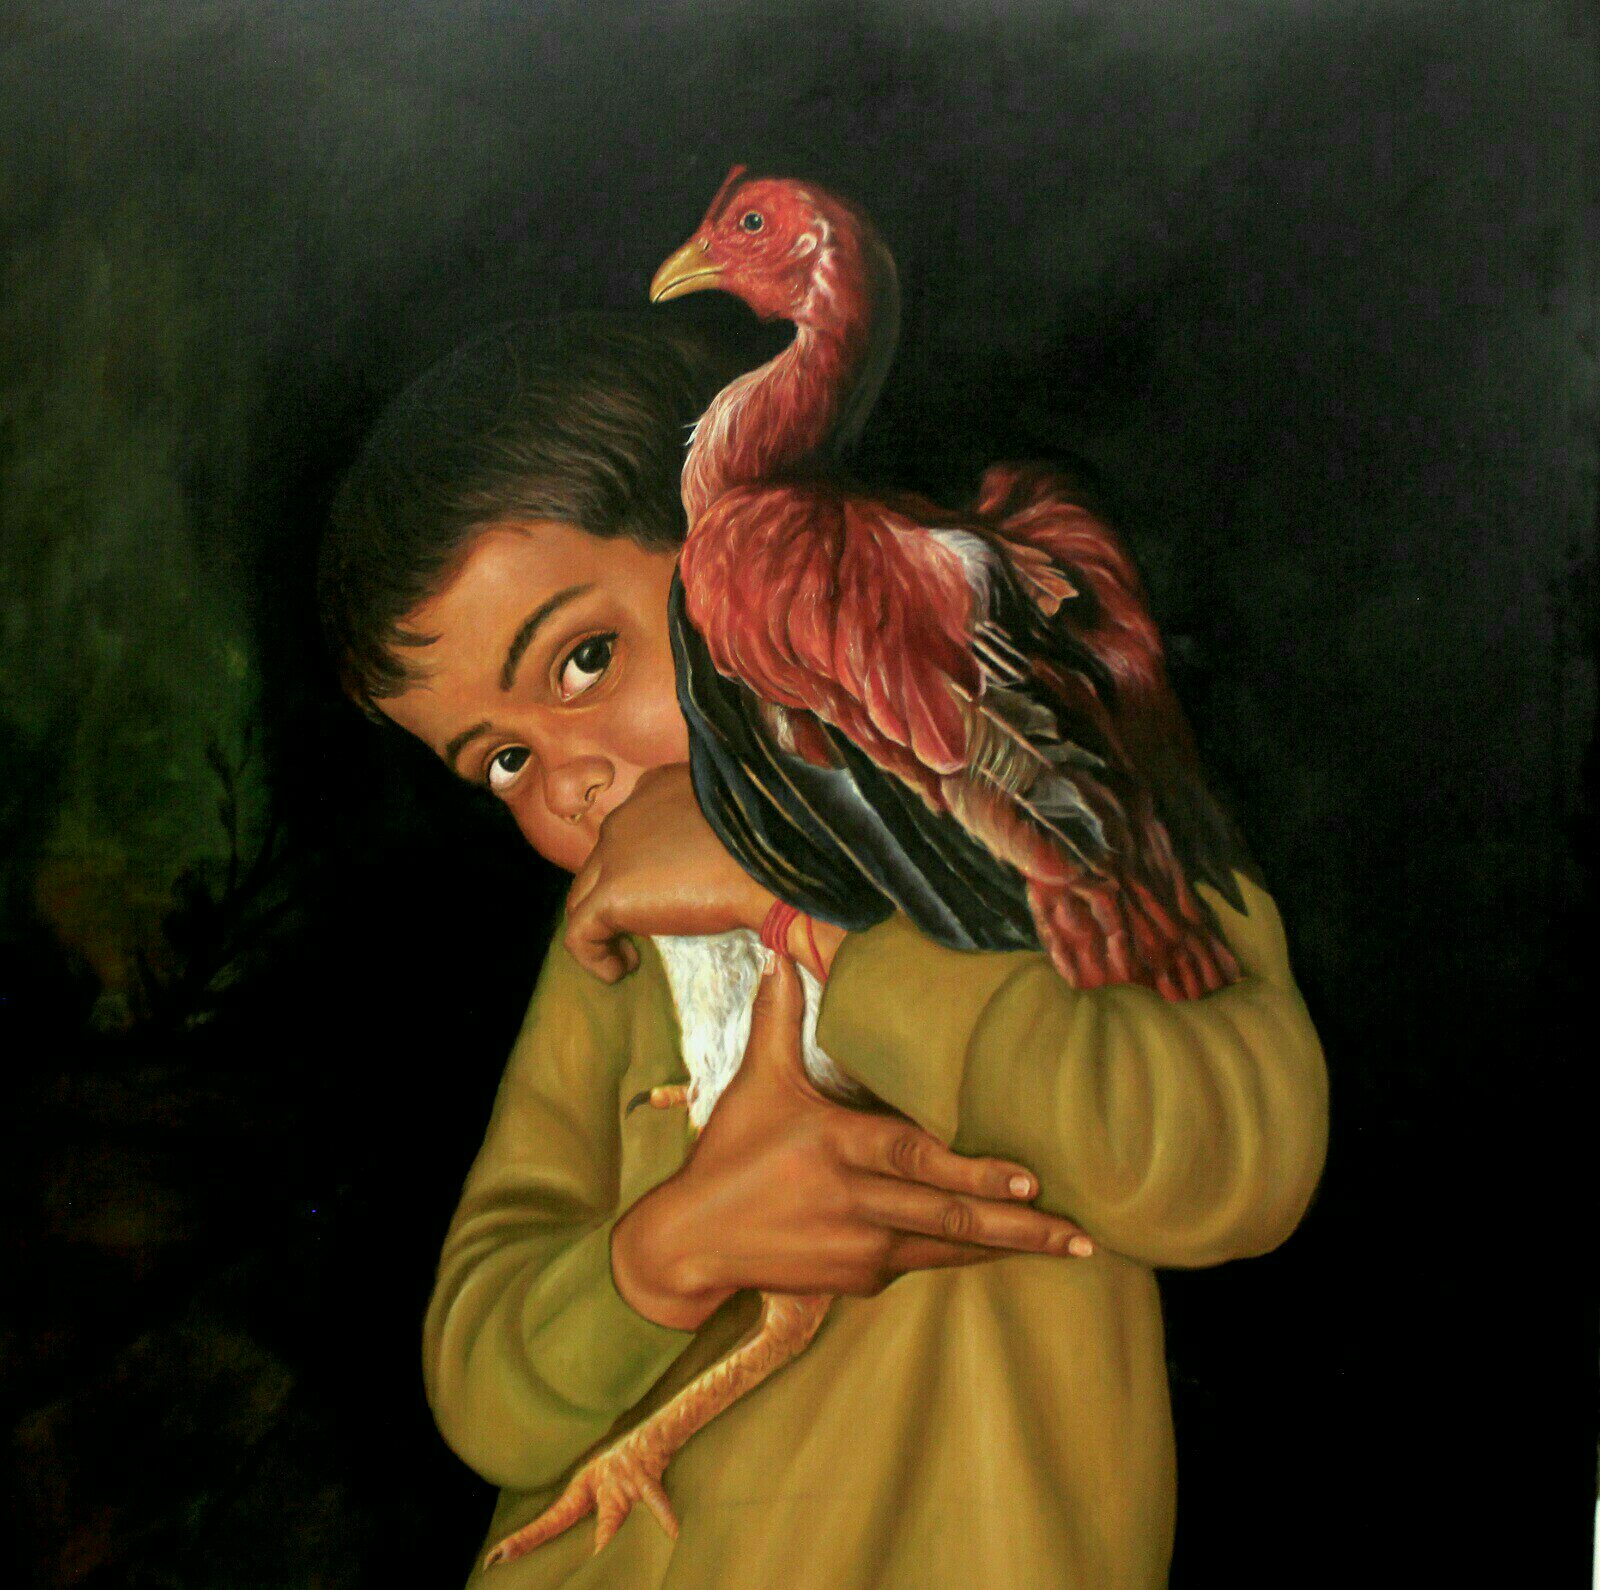 Artist: Yasir Noor <br>Medium: Oil on canvas <br> Size: 45 x45 inches